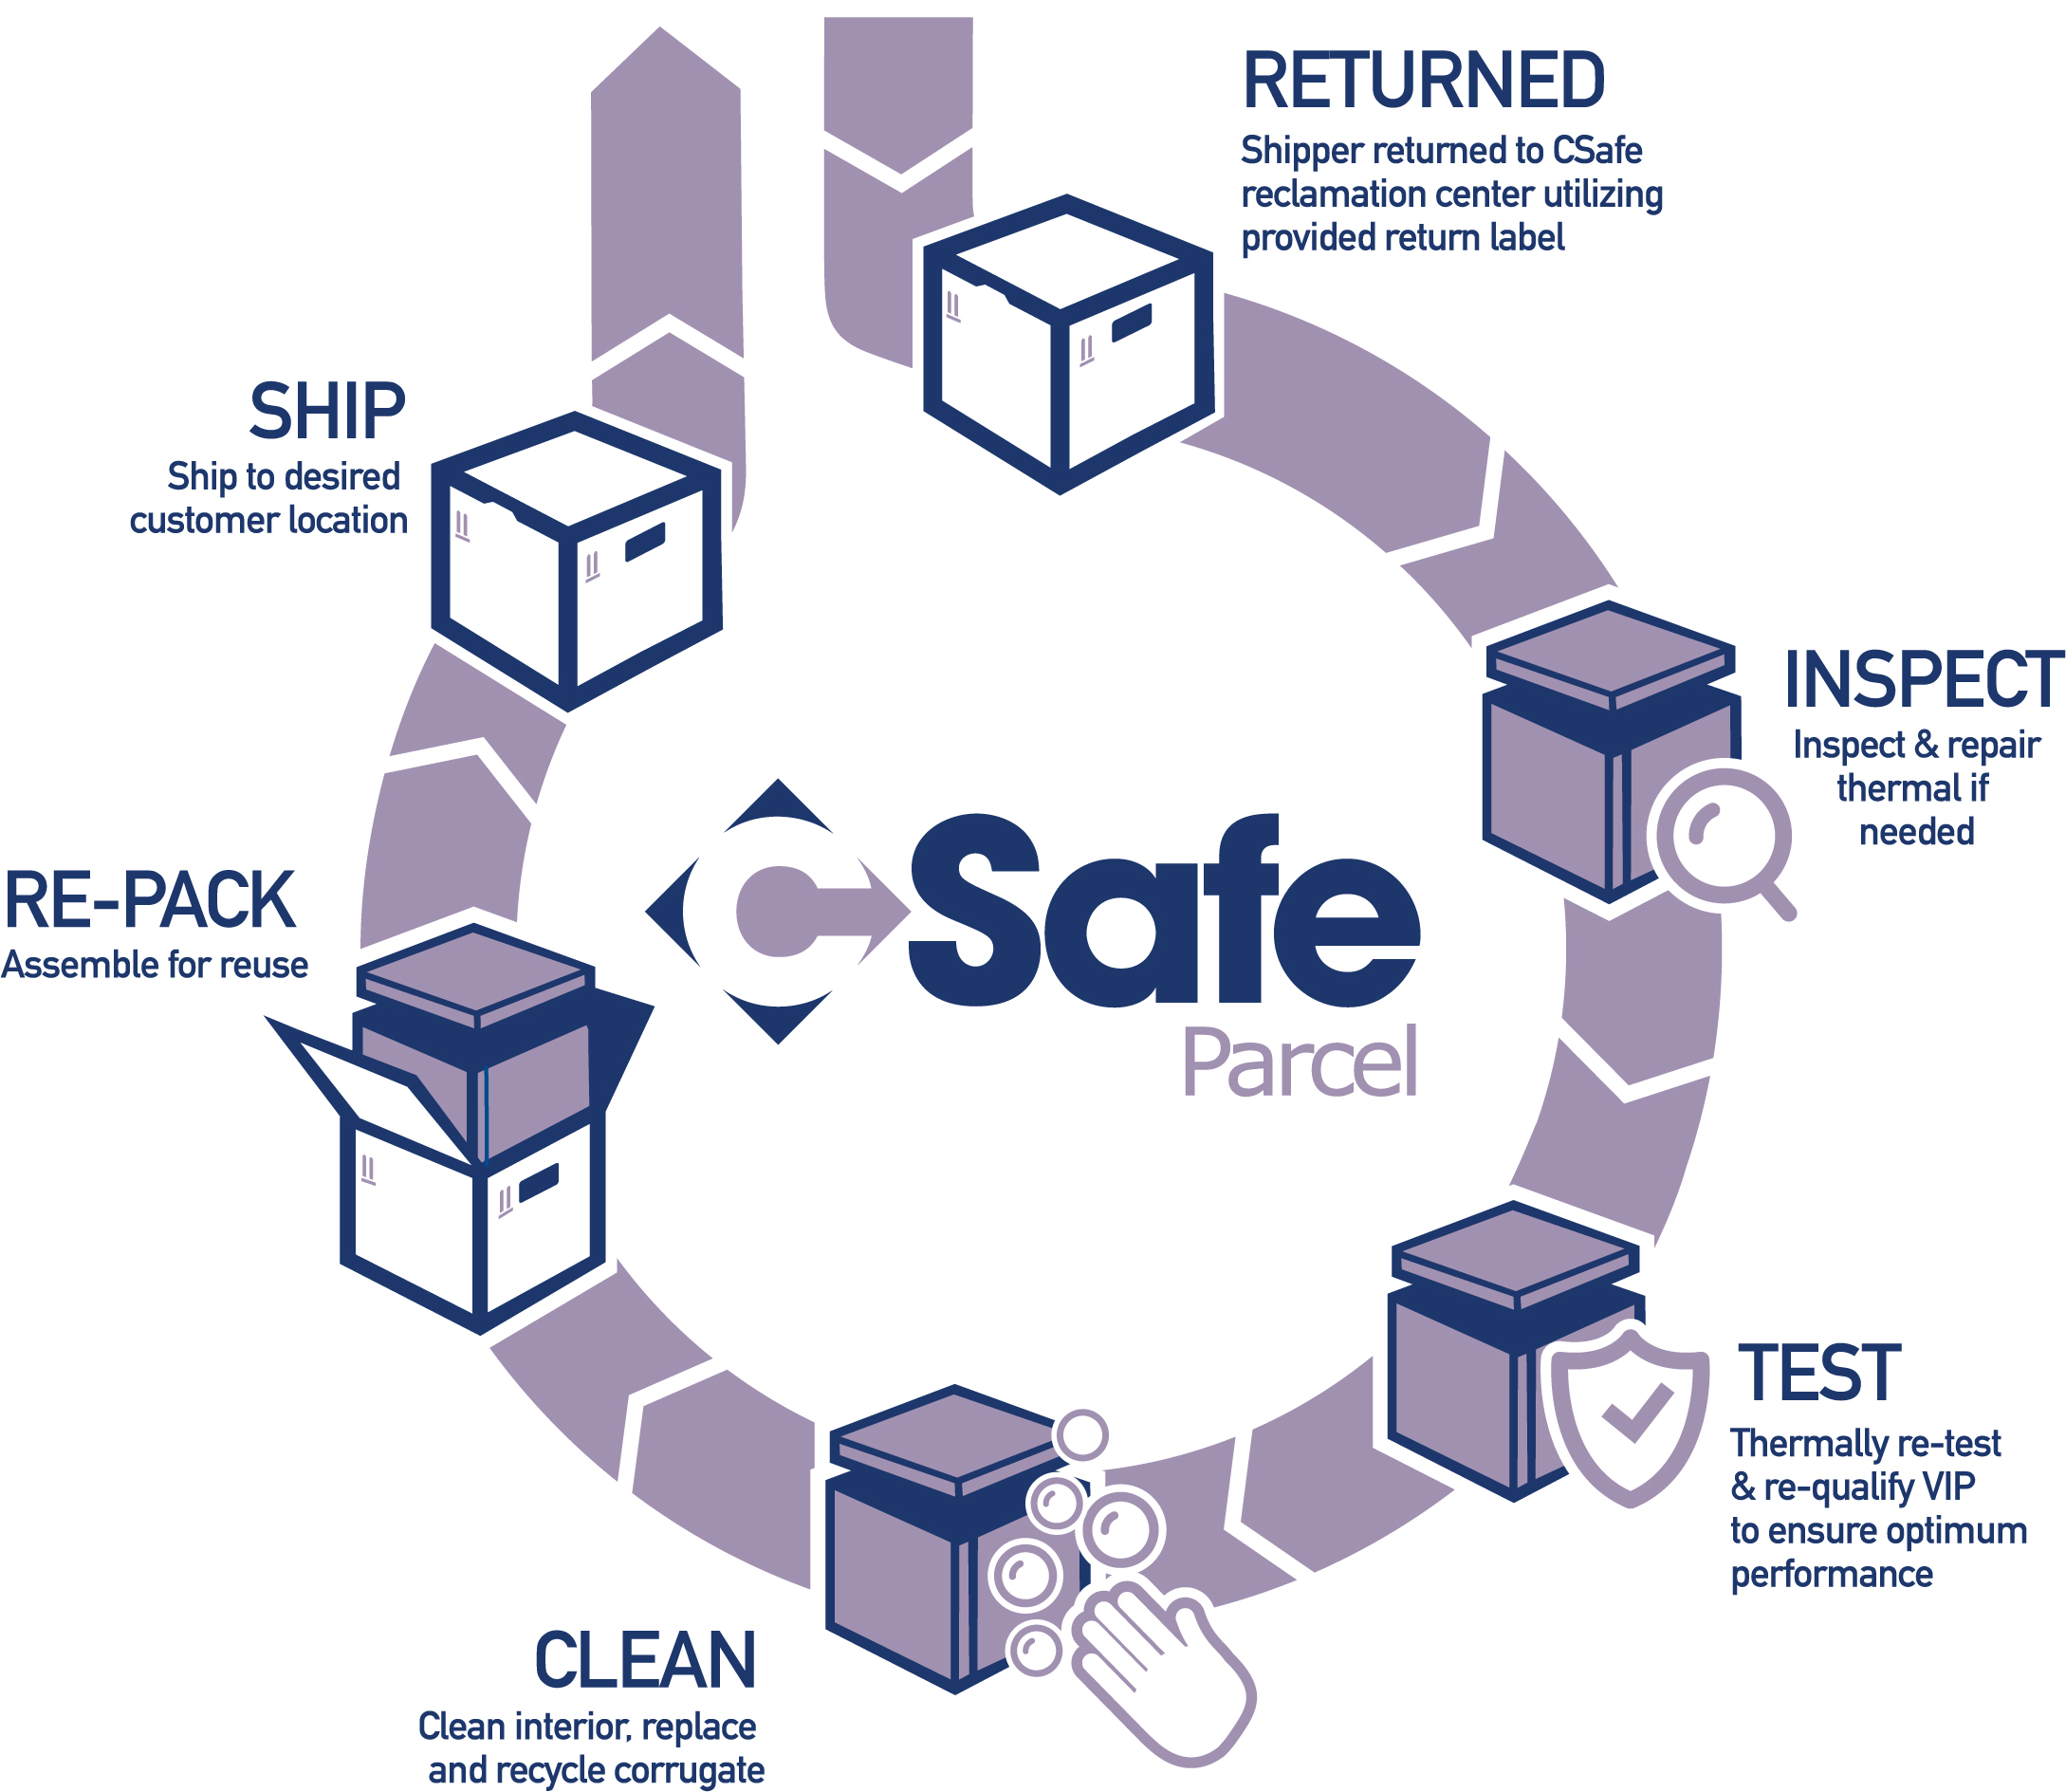 CSafe Parcel reuse process